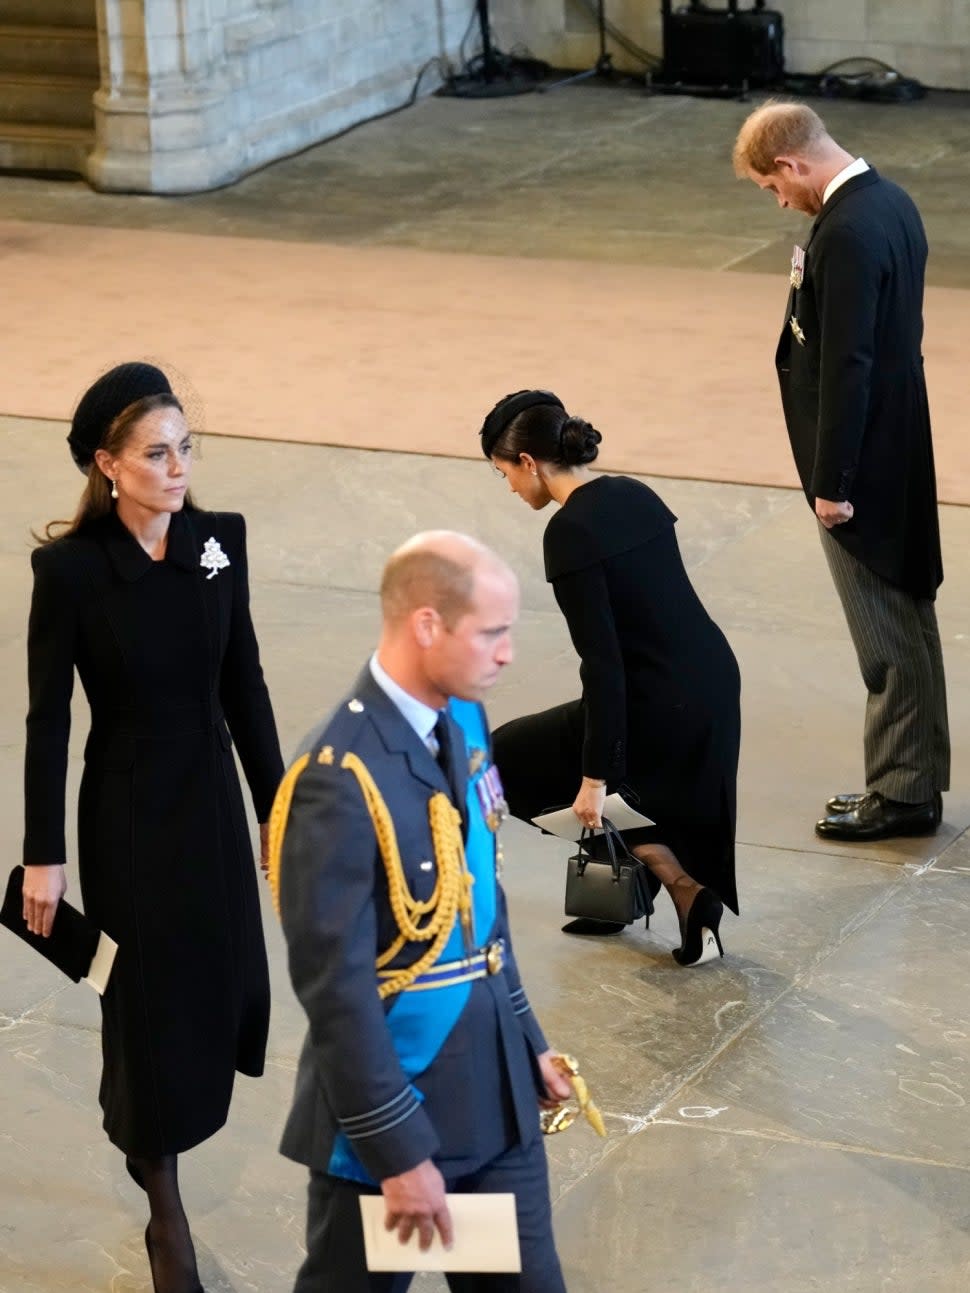 Kate Middleton, Prince William, Meghan Markle, Prince Harry